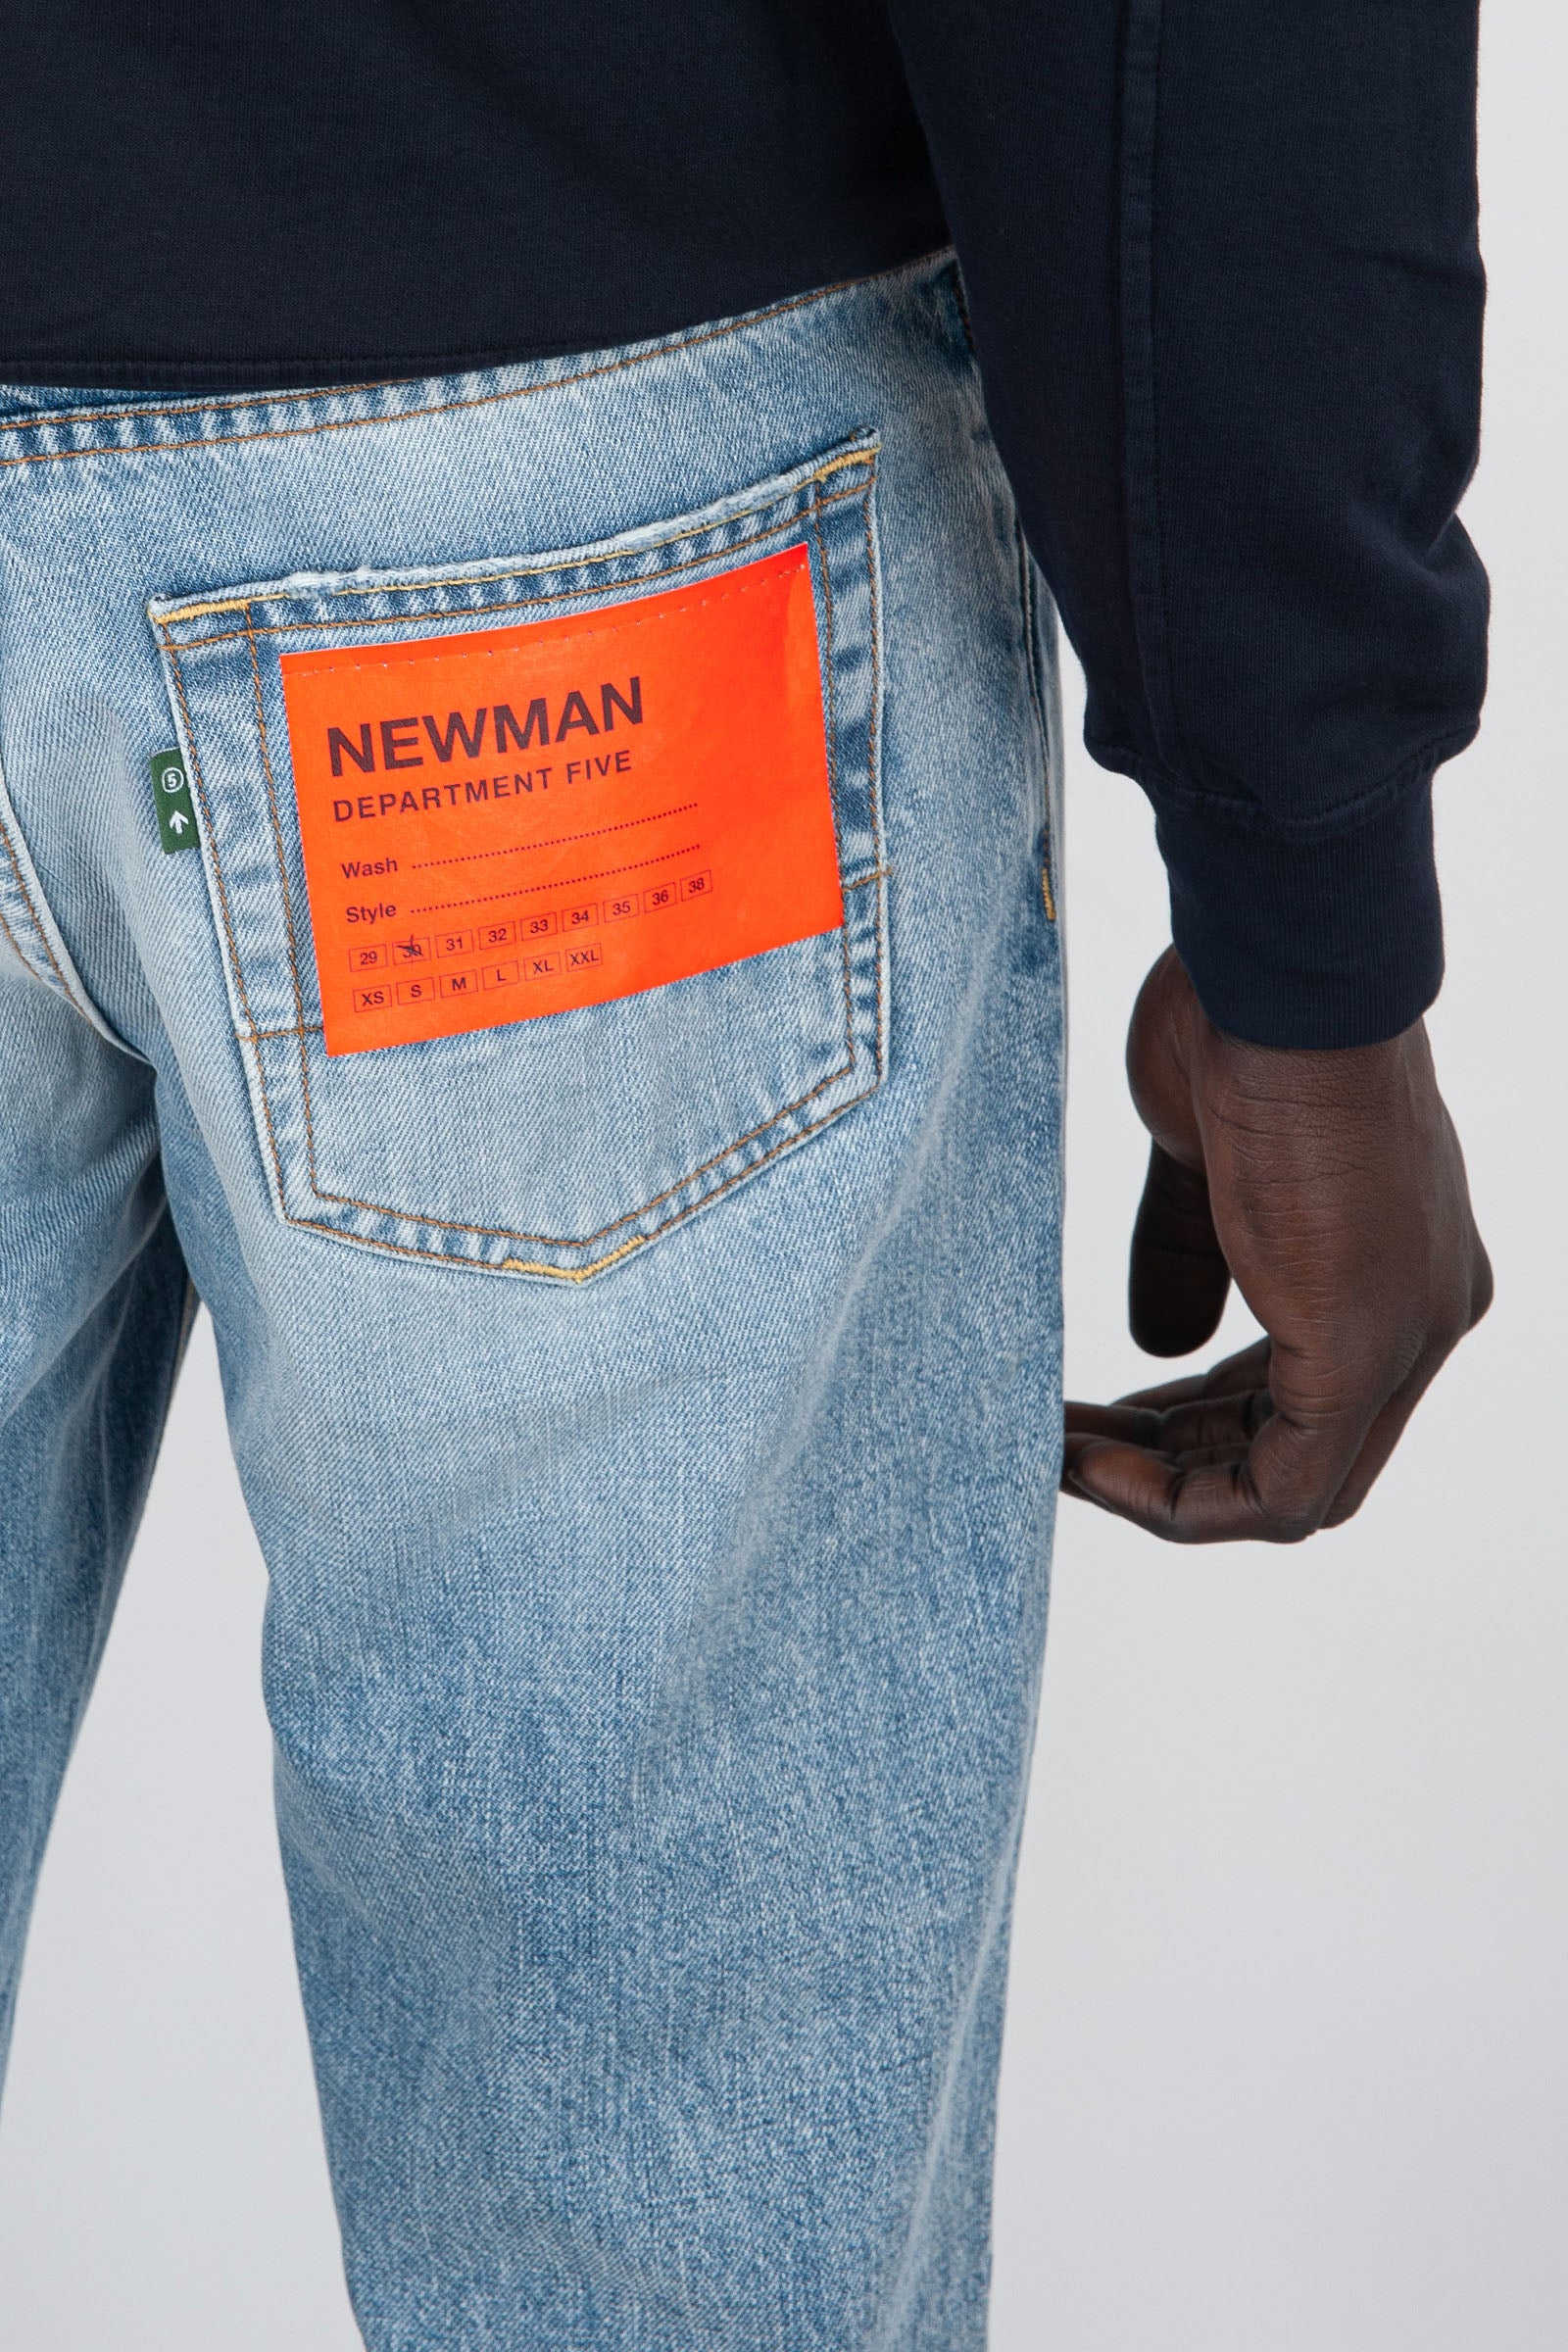 Department Five Jeans Newman Denim Blu Chiaro - 4